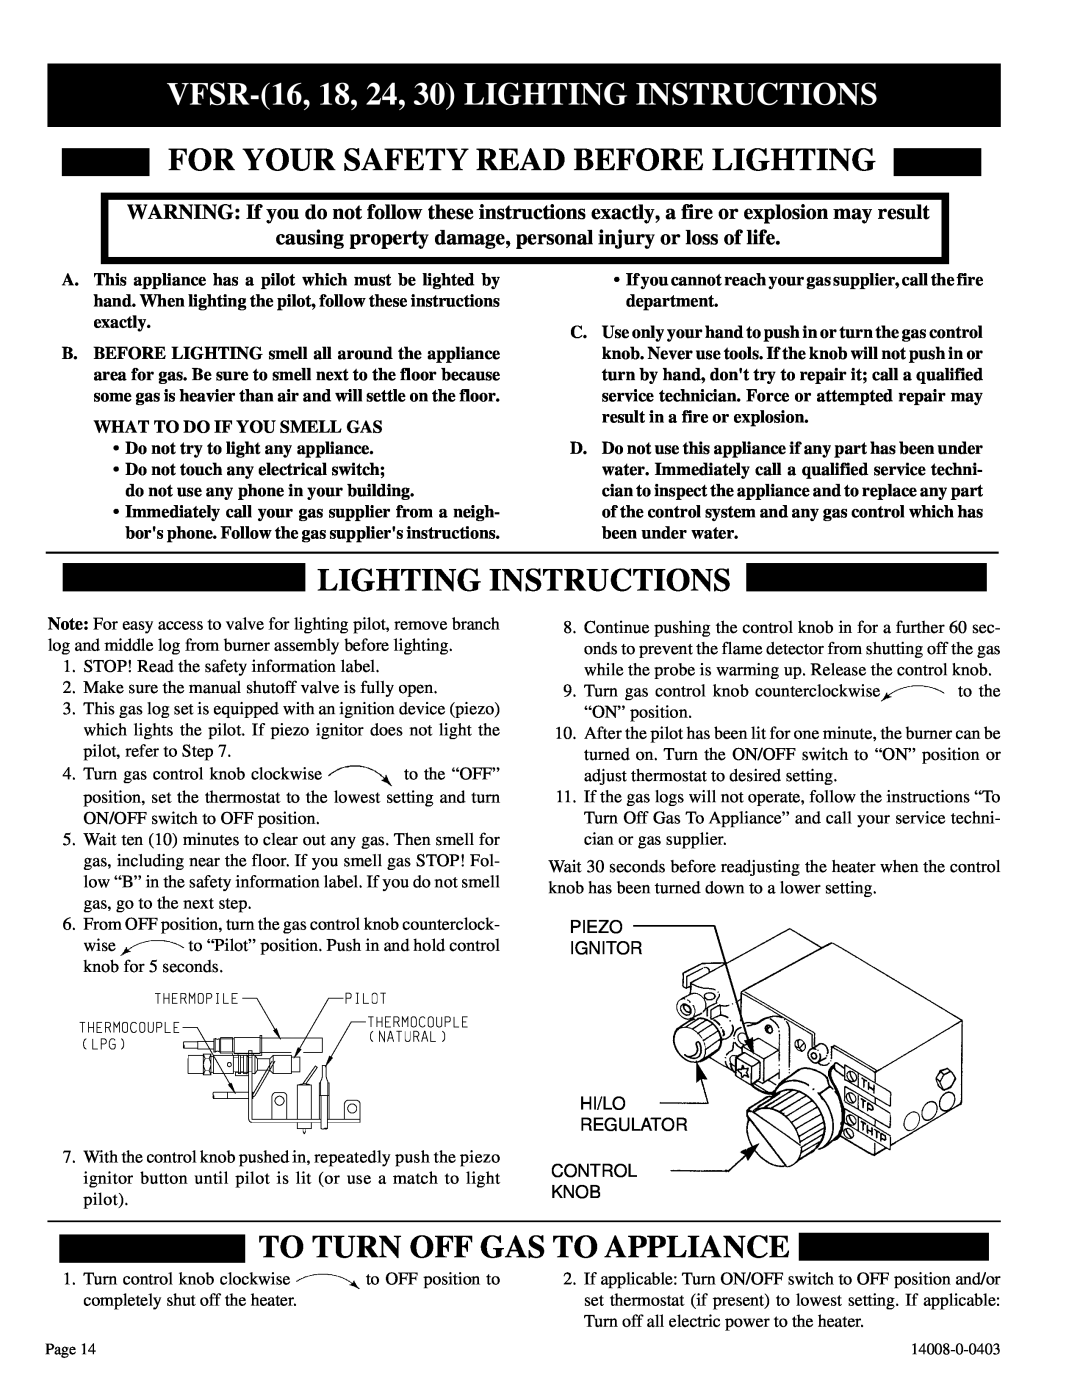 Empire Comfort Systems VFSR-18-3, VFSR-16-3 VFSR-16,18, 24, 30 LIGHTING INSTRUCTIONS, For Your Safety Read Before Lighting 